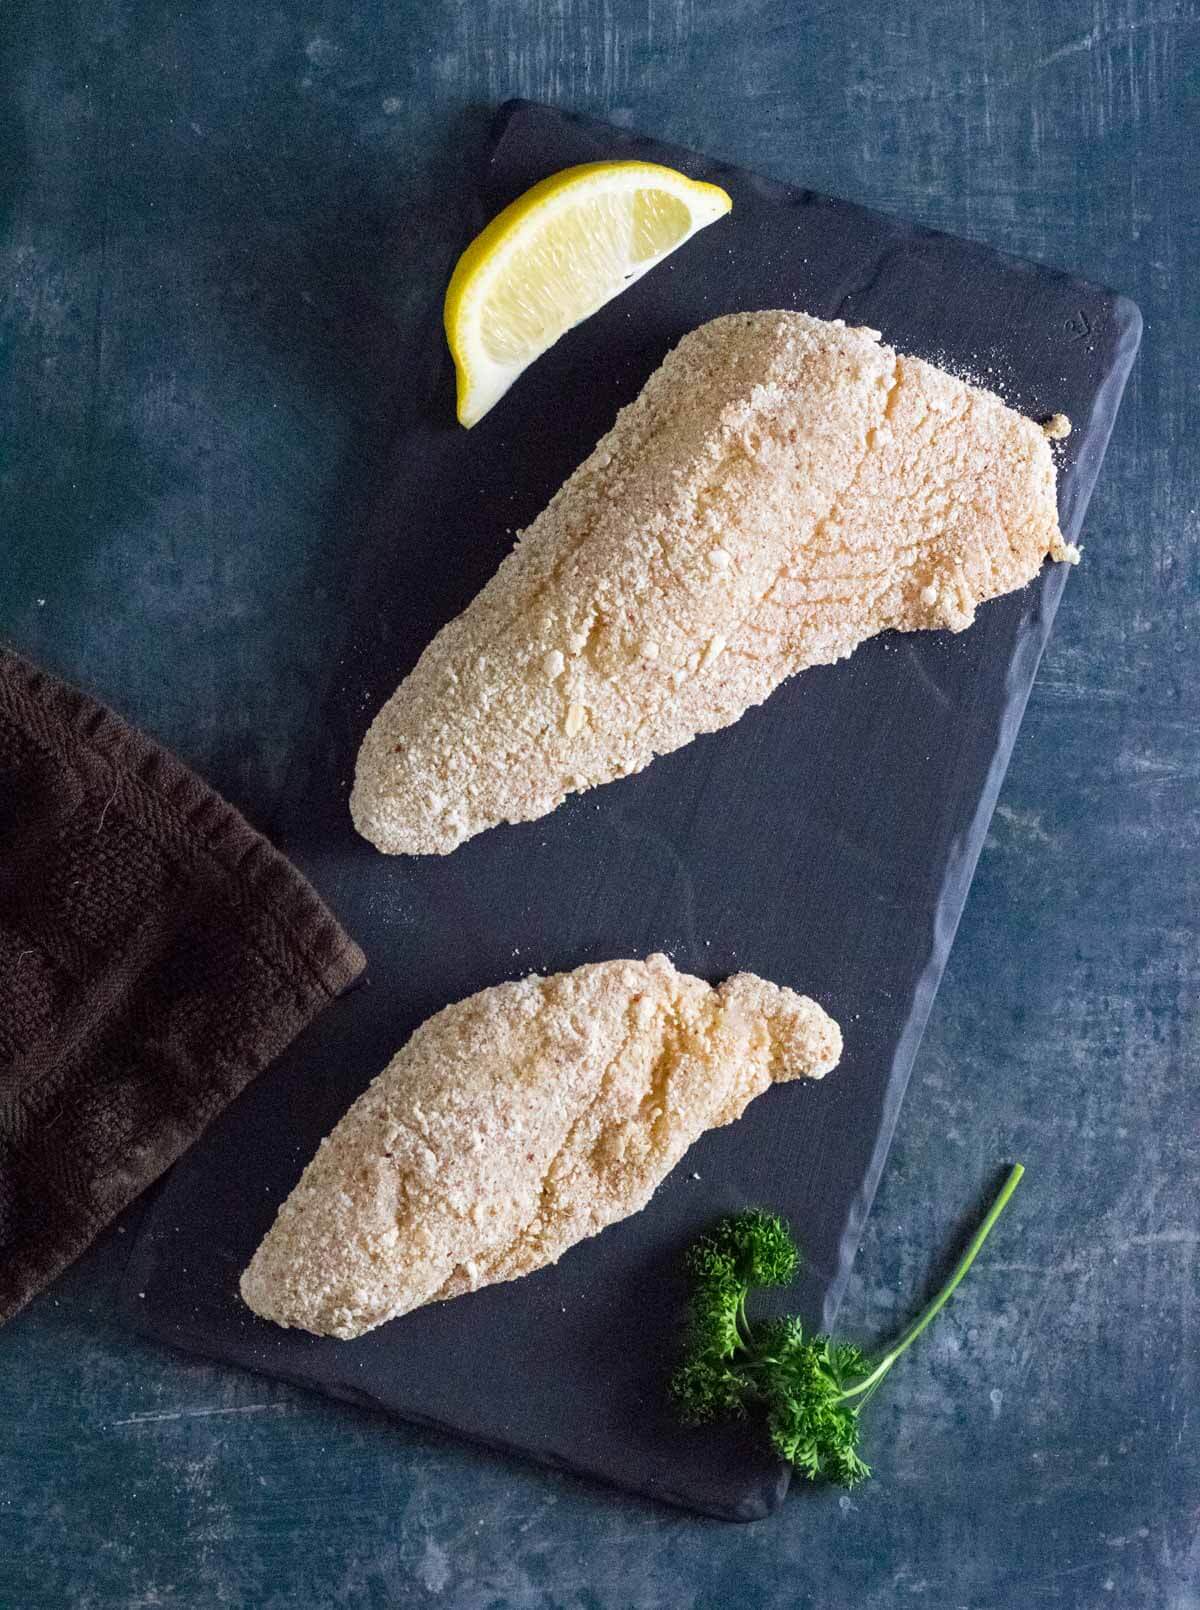 How to bread walleye fillets.